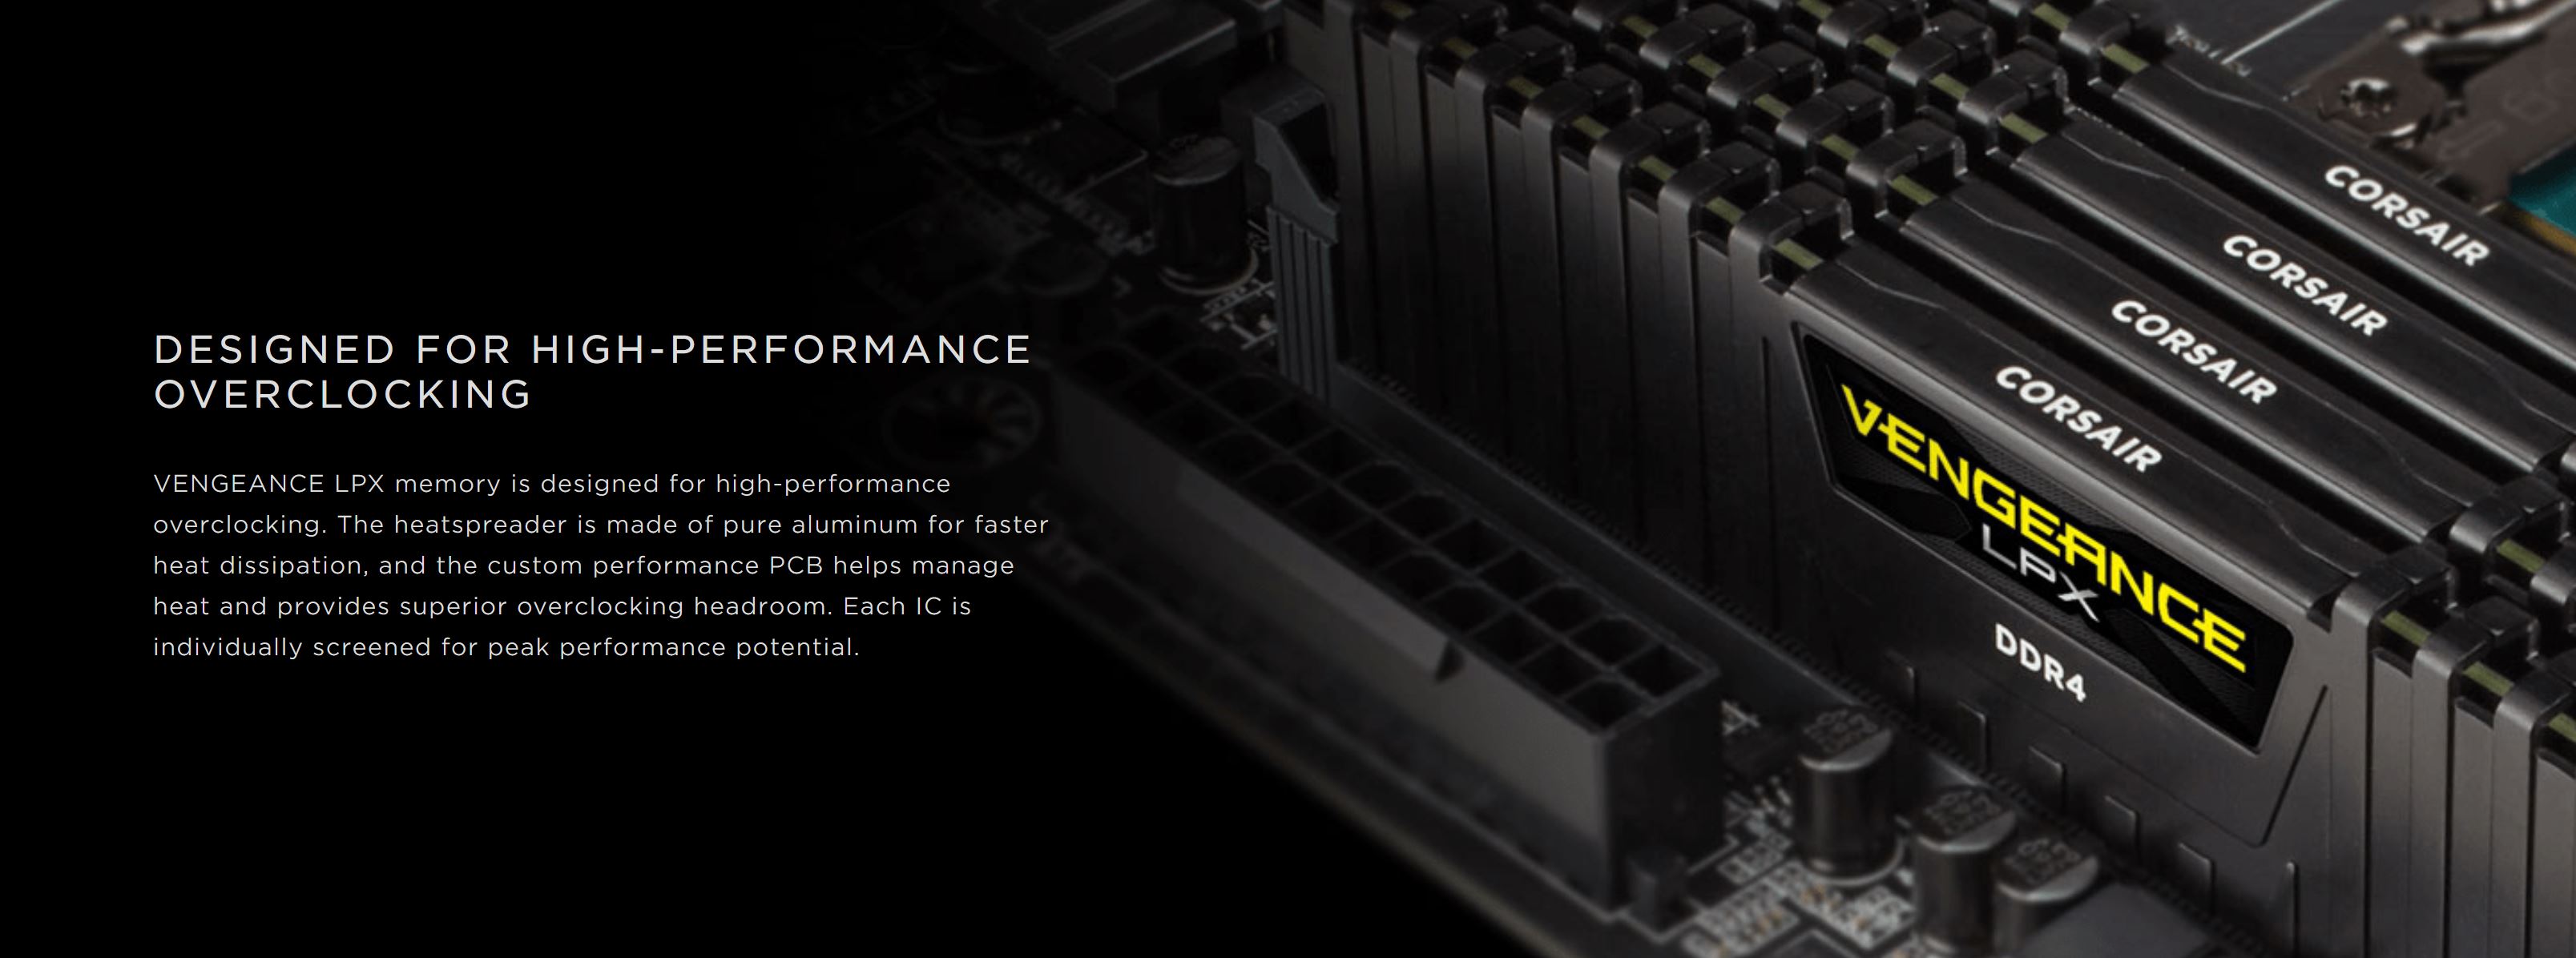 Corsair 16GB (2x8GB) CMK16GX4M2Z3200C16 Vengeance LPX 3200MHz DDR4 RAM - Black